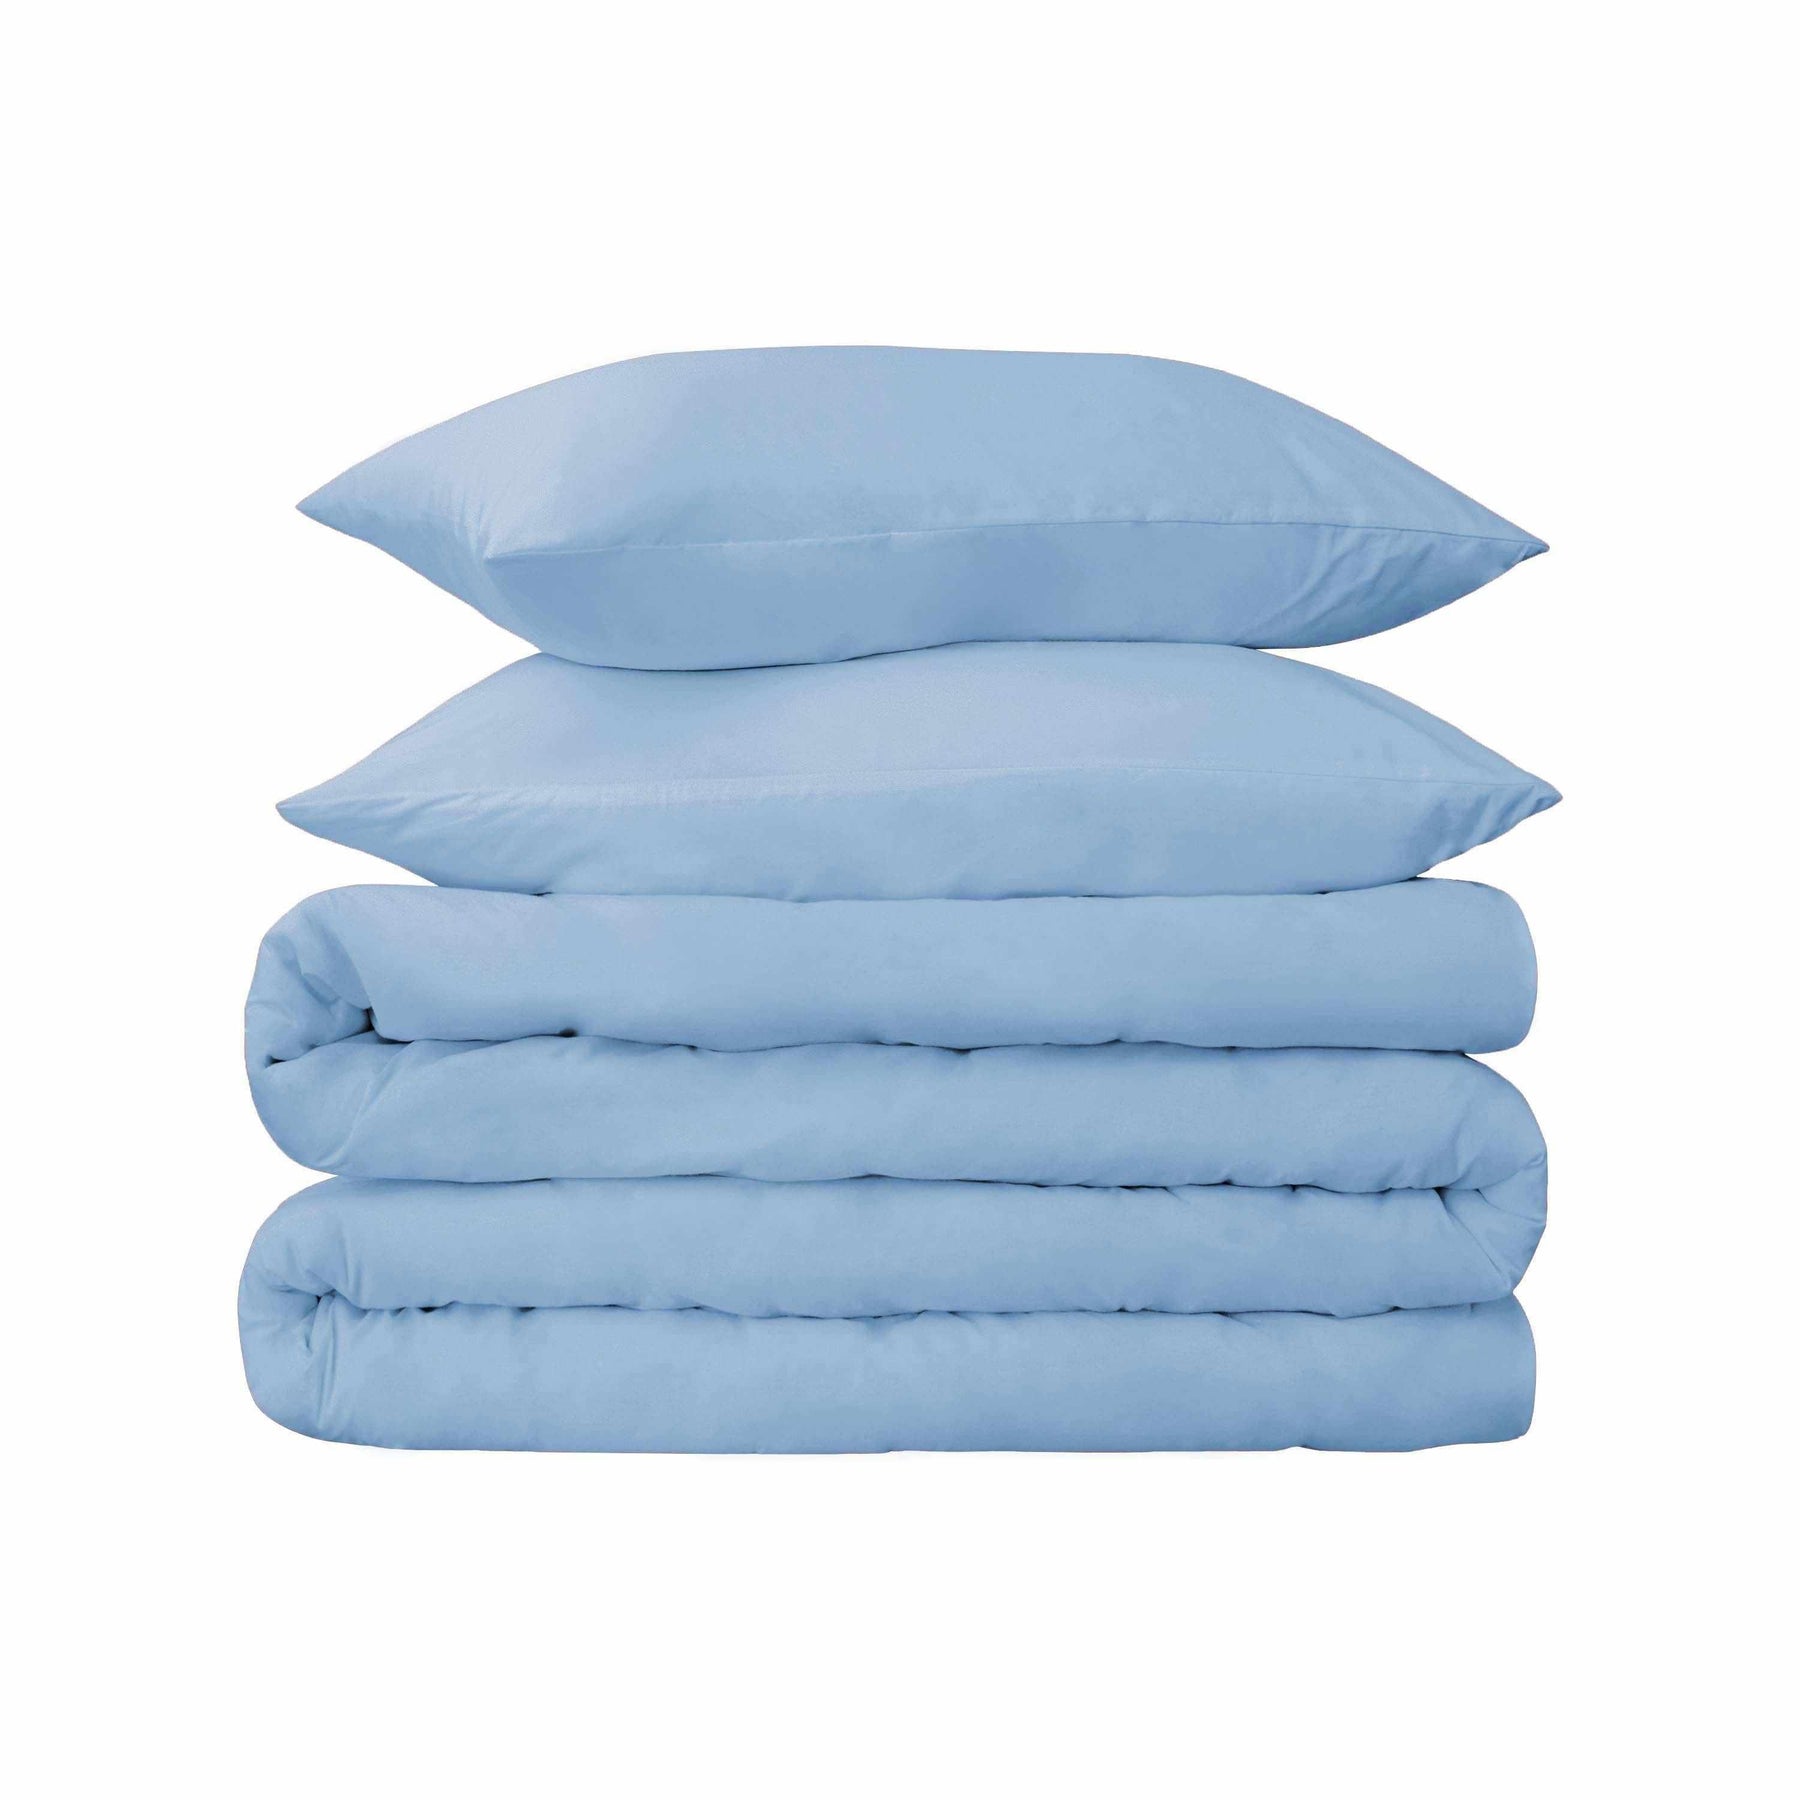  Superior Egyptian Cotton 700 Thread Count Breathable 3-Piece Duvet Cover Bedding Set - Light Blue